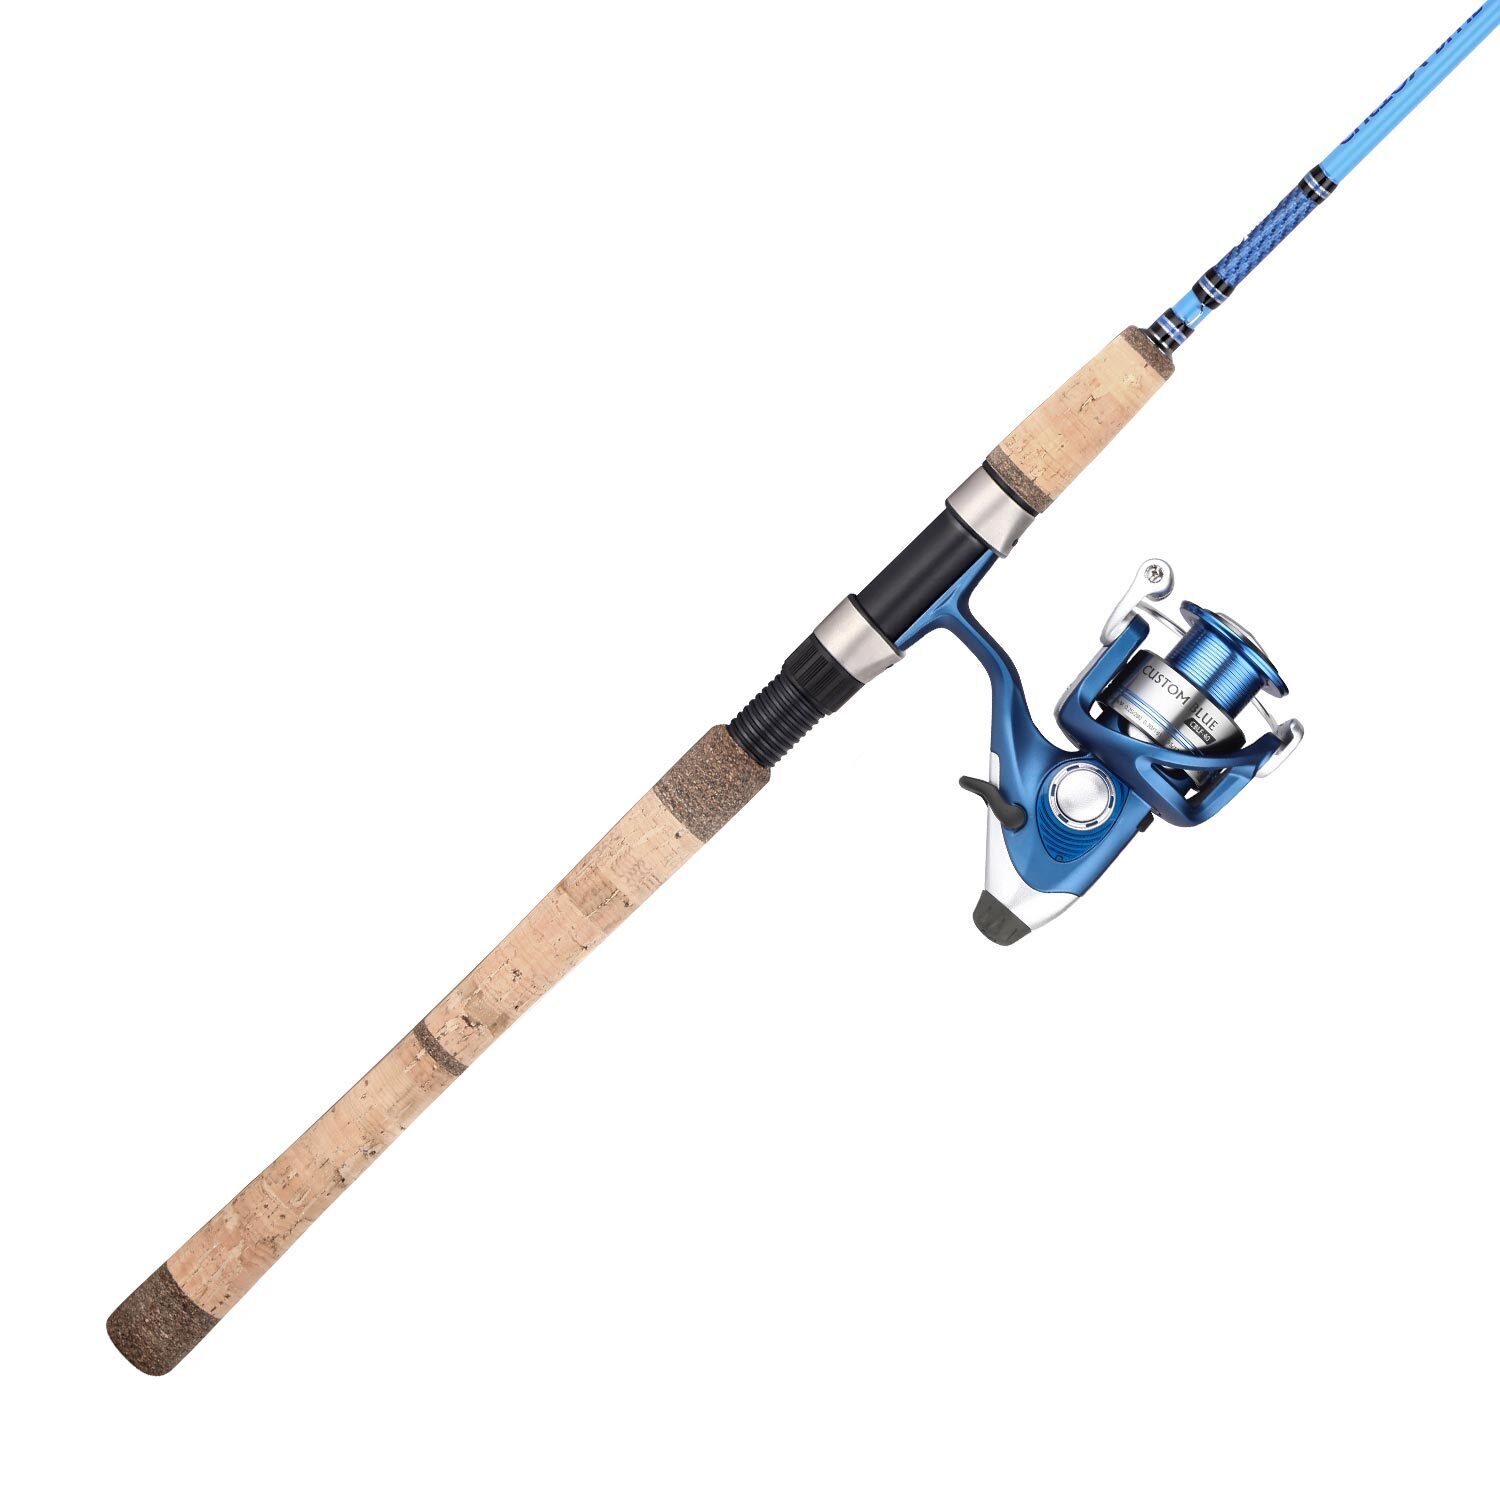 Daiwa Samurai X Spinning Fishing Rod and Reel Combo 2 For $30 +